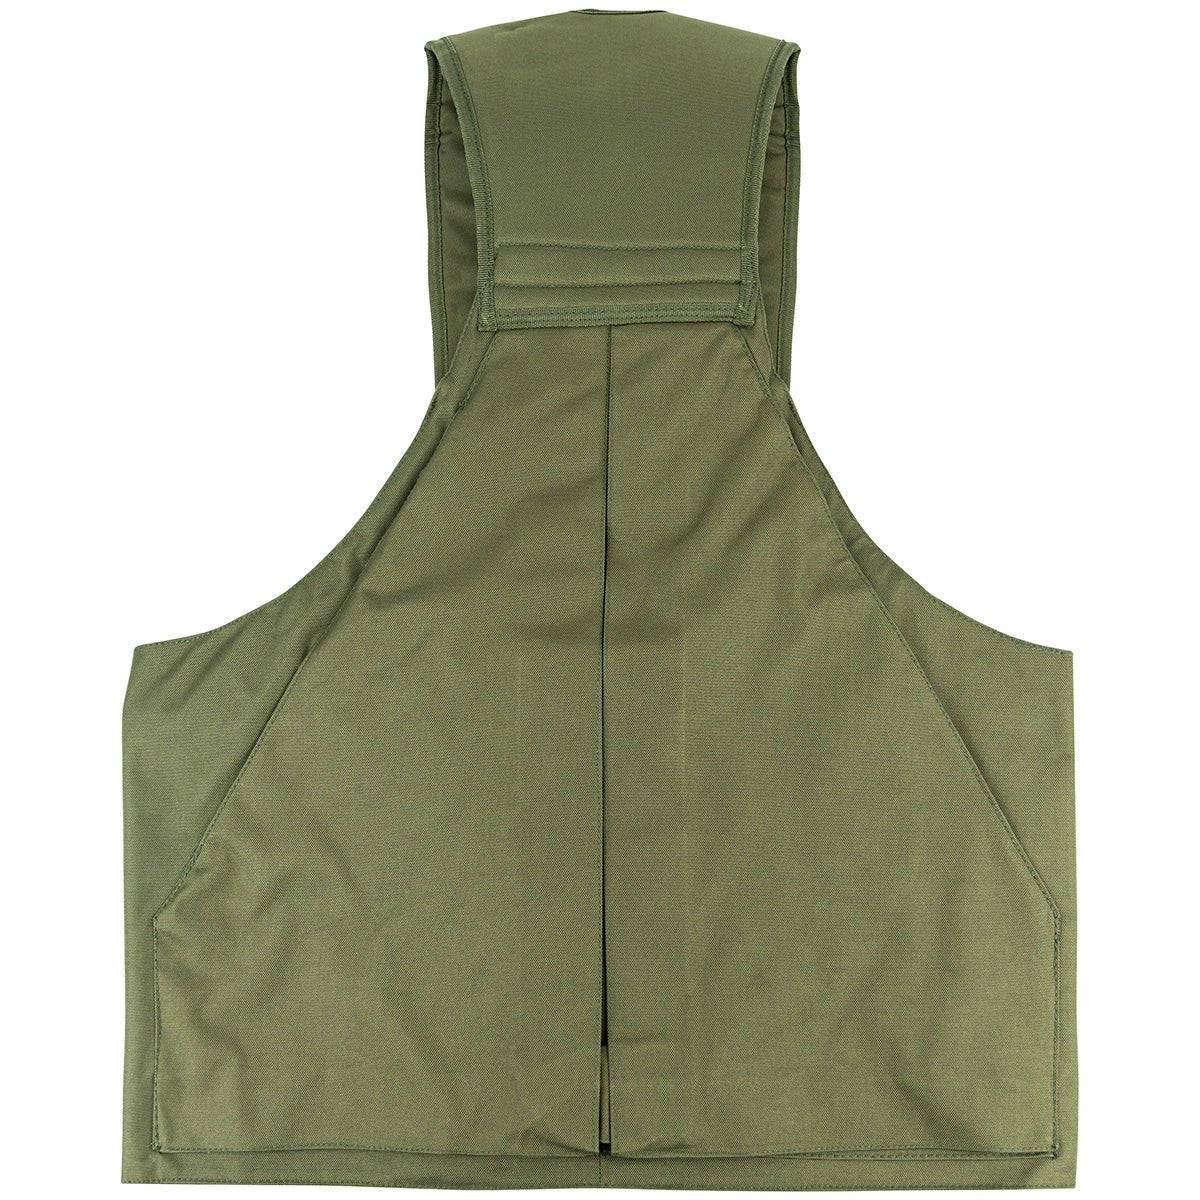 Jack Pyke Dog Handlers Vest Olive Green - John Bull Clothing